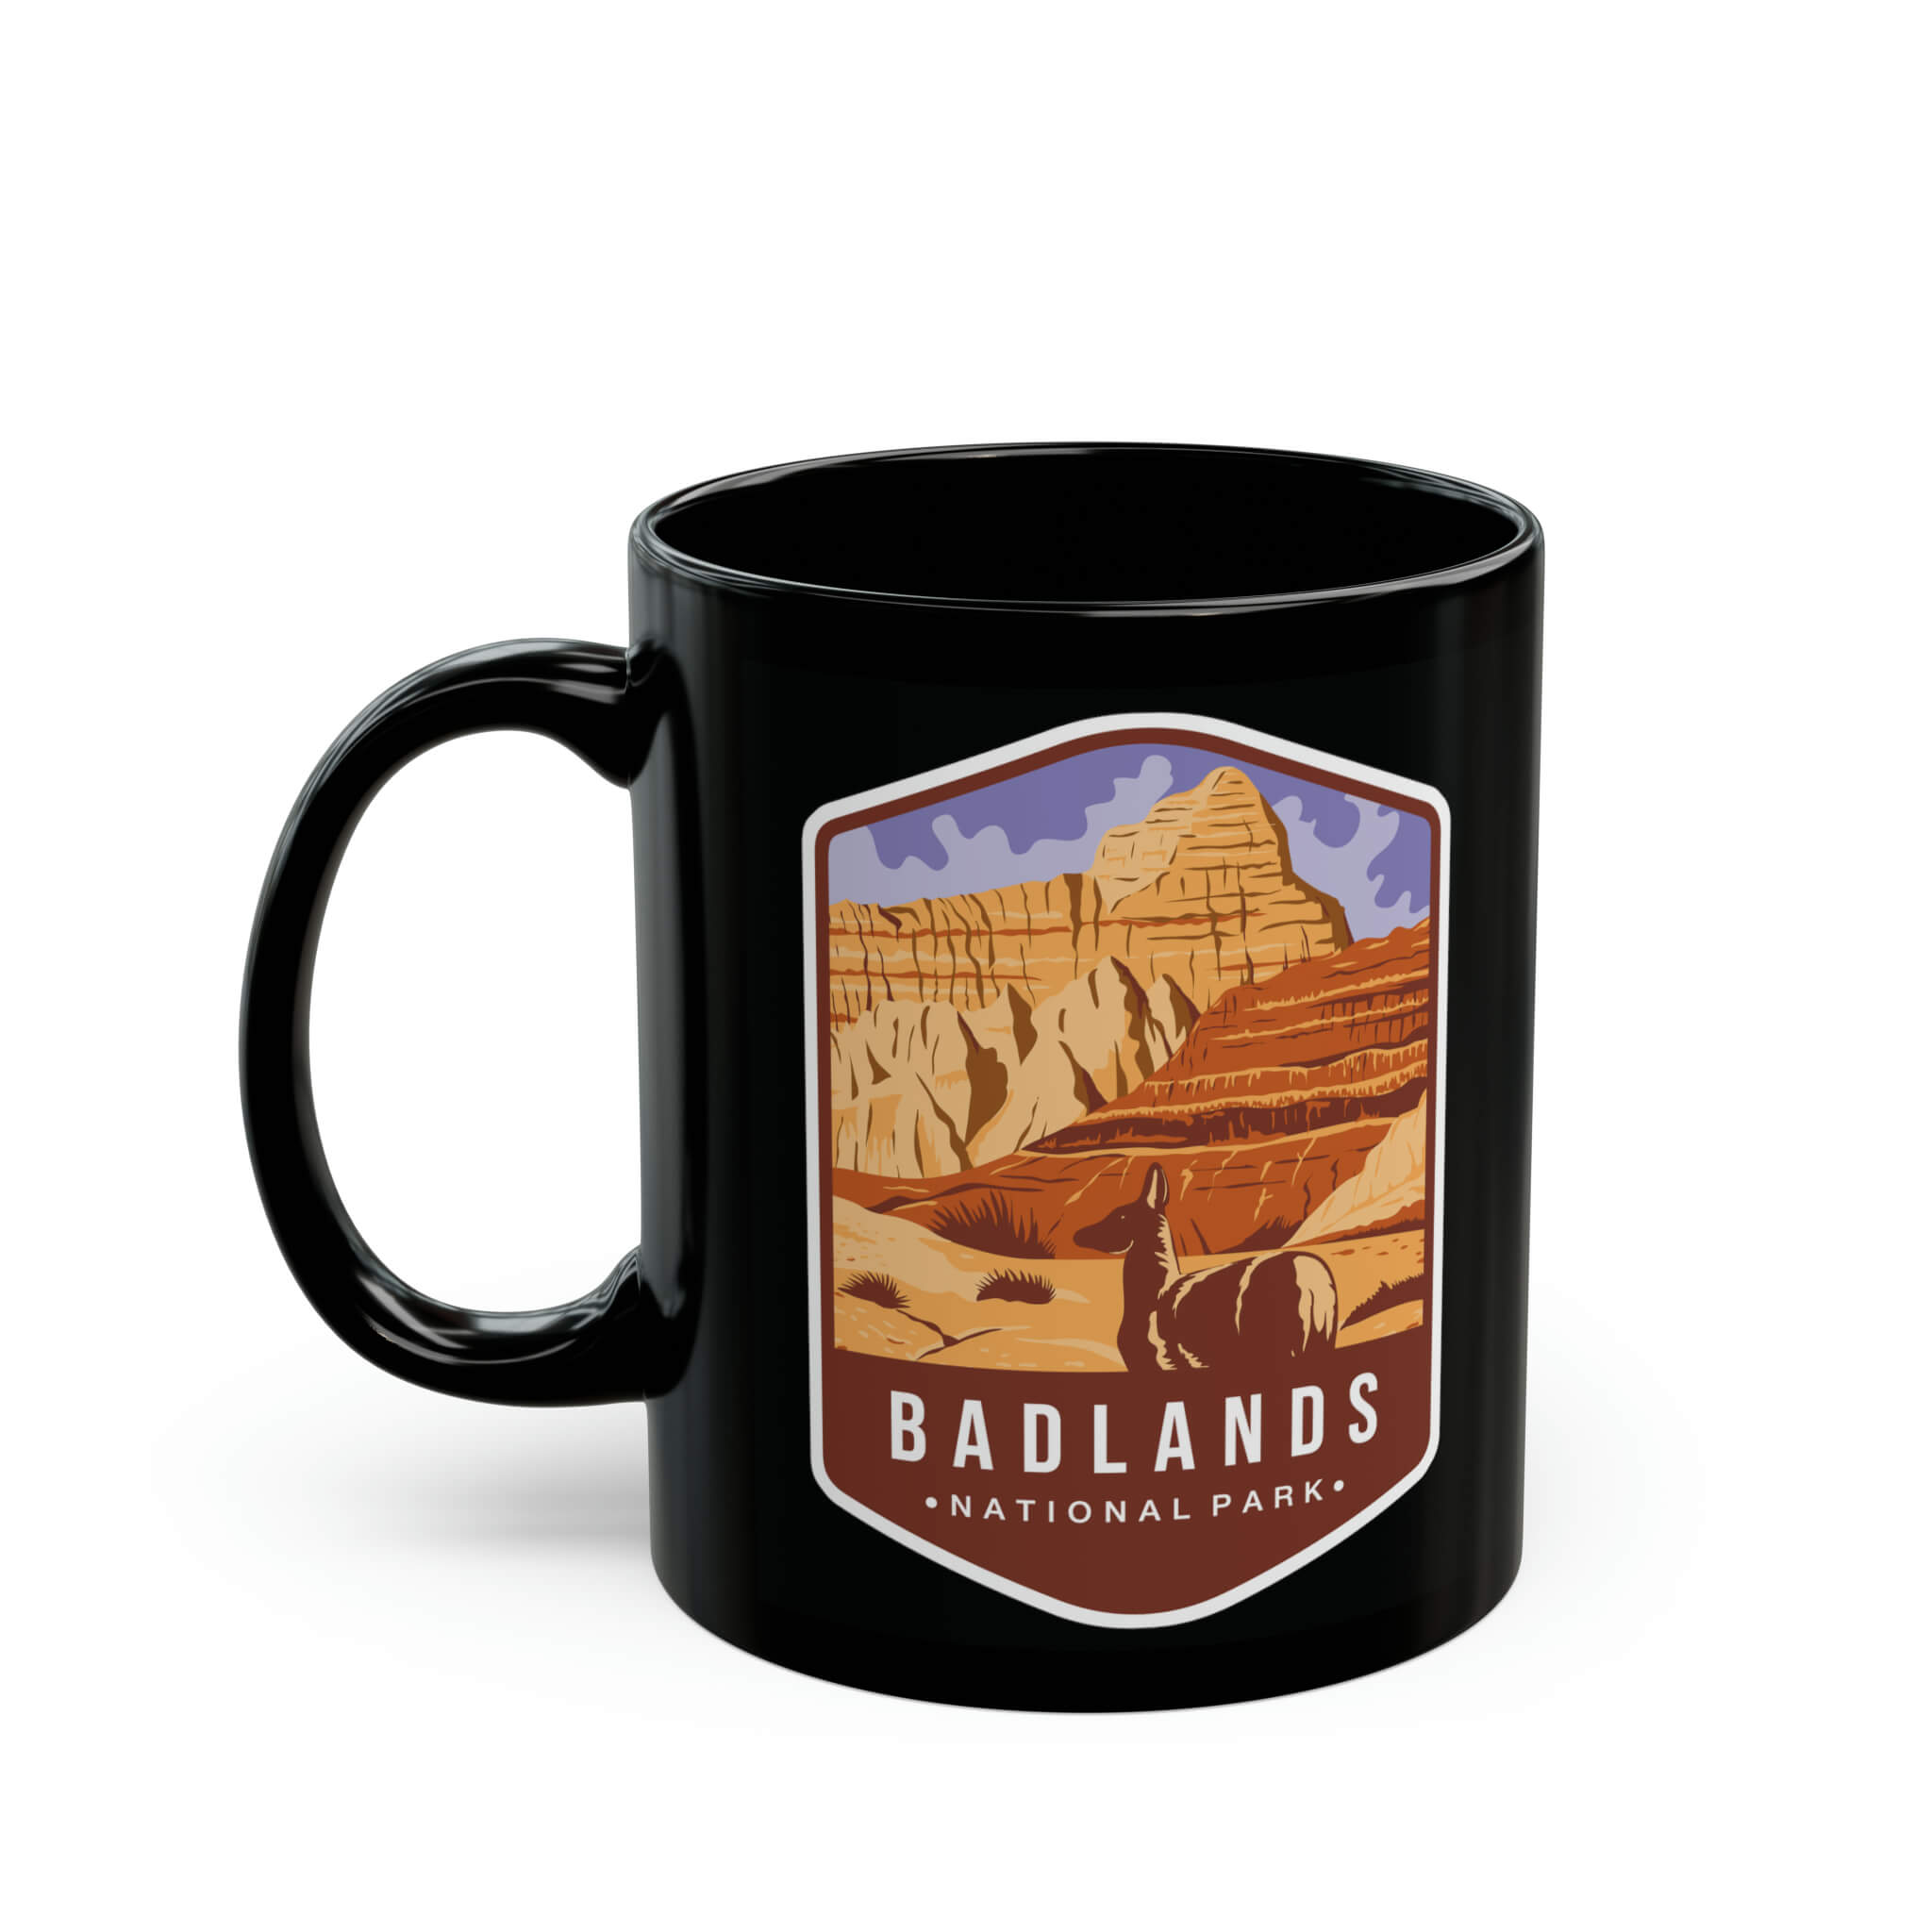 Badlands National Park Black Ceramic Mug